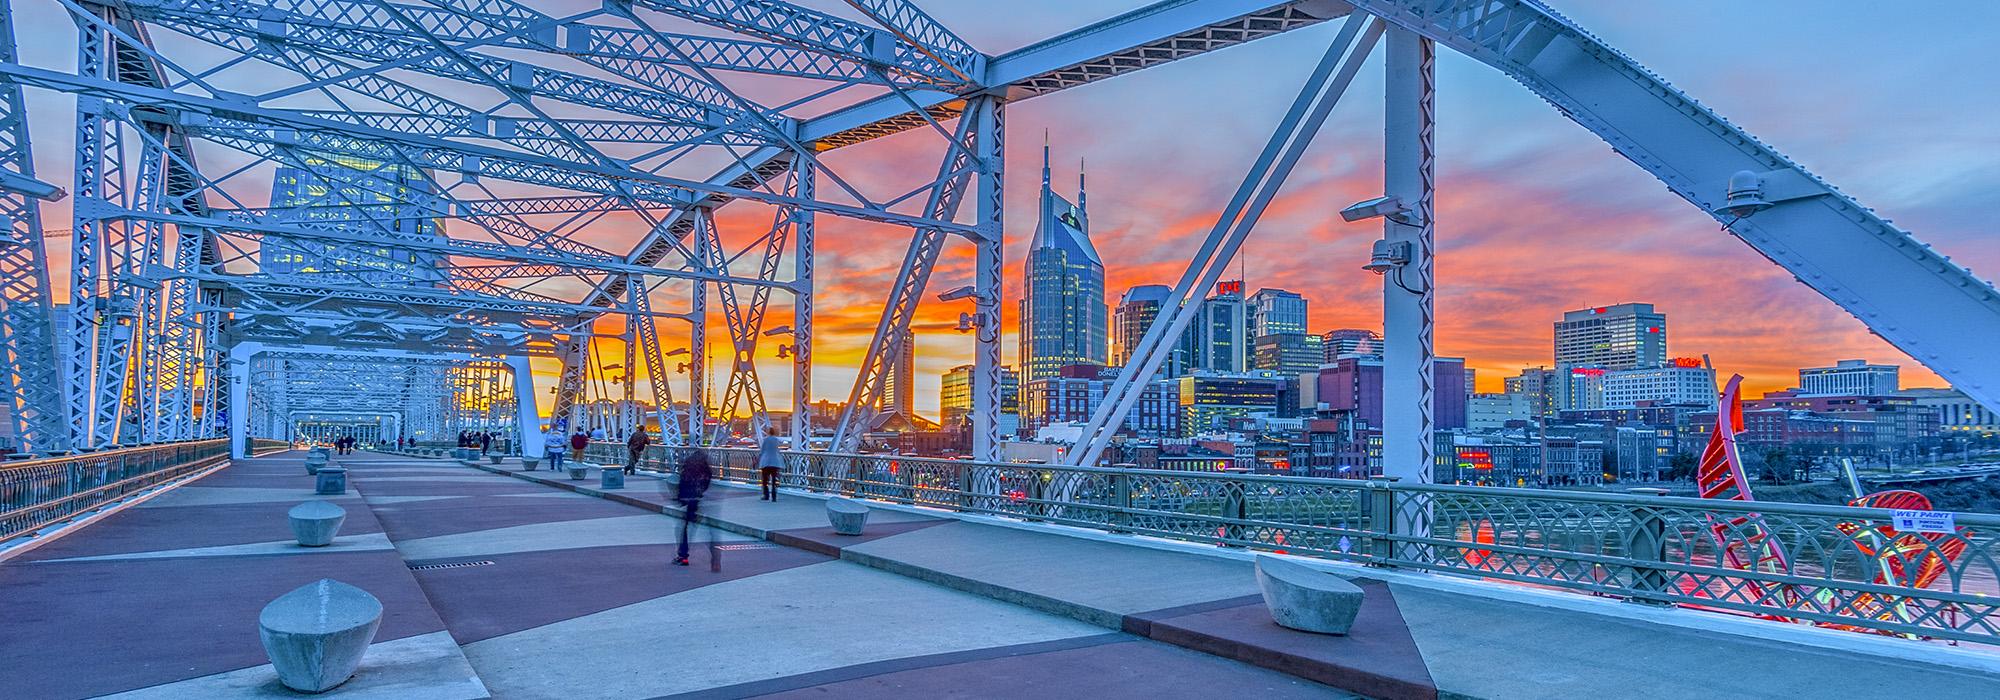 John Seigenthaler Pedestrian Bridge, Nashville, TN